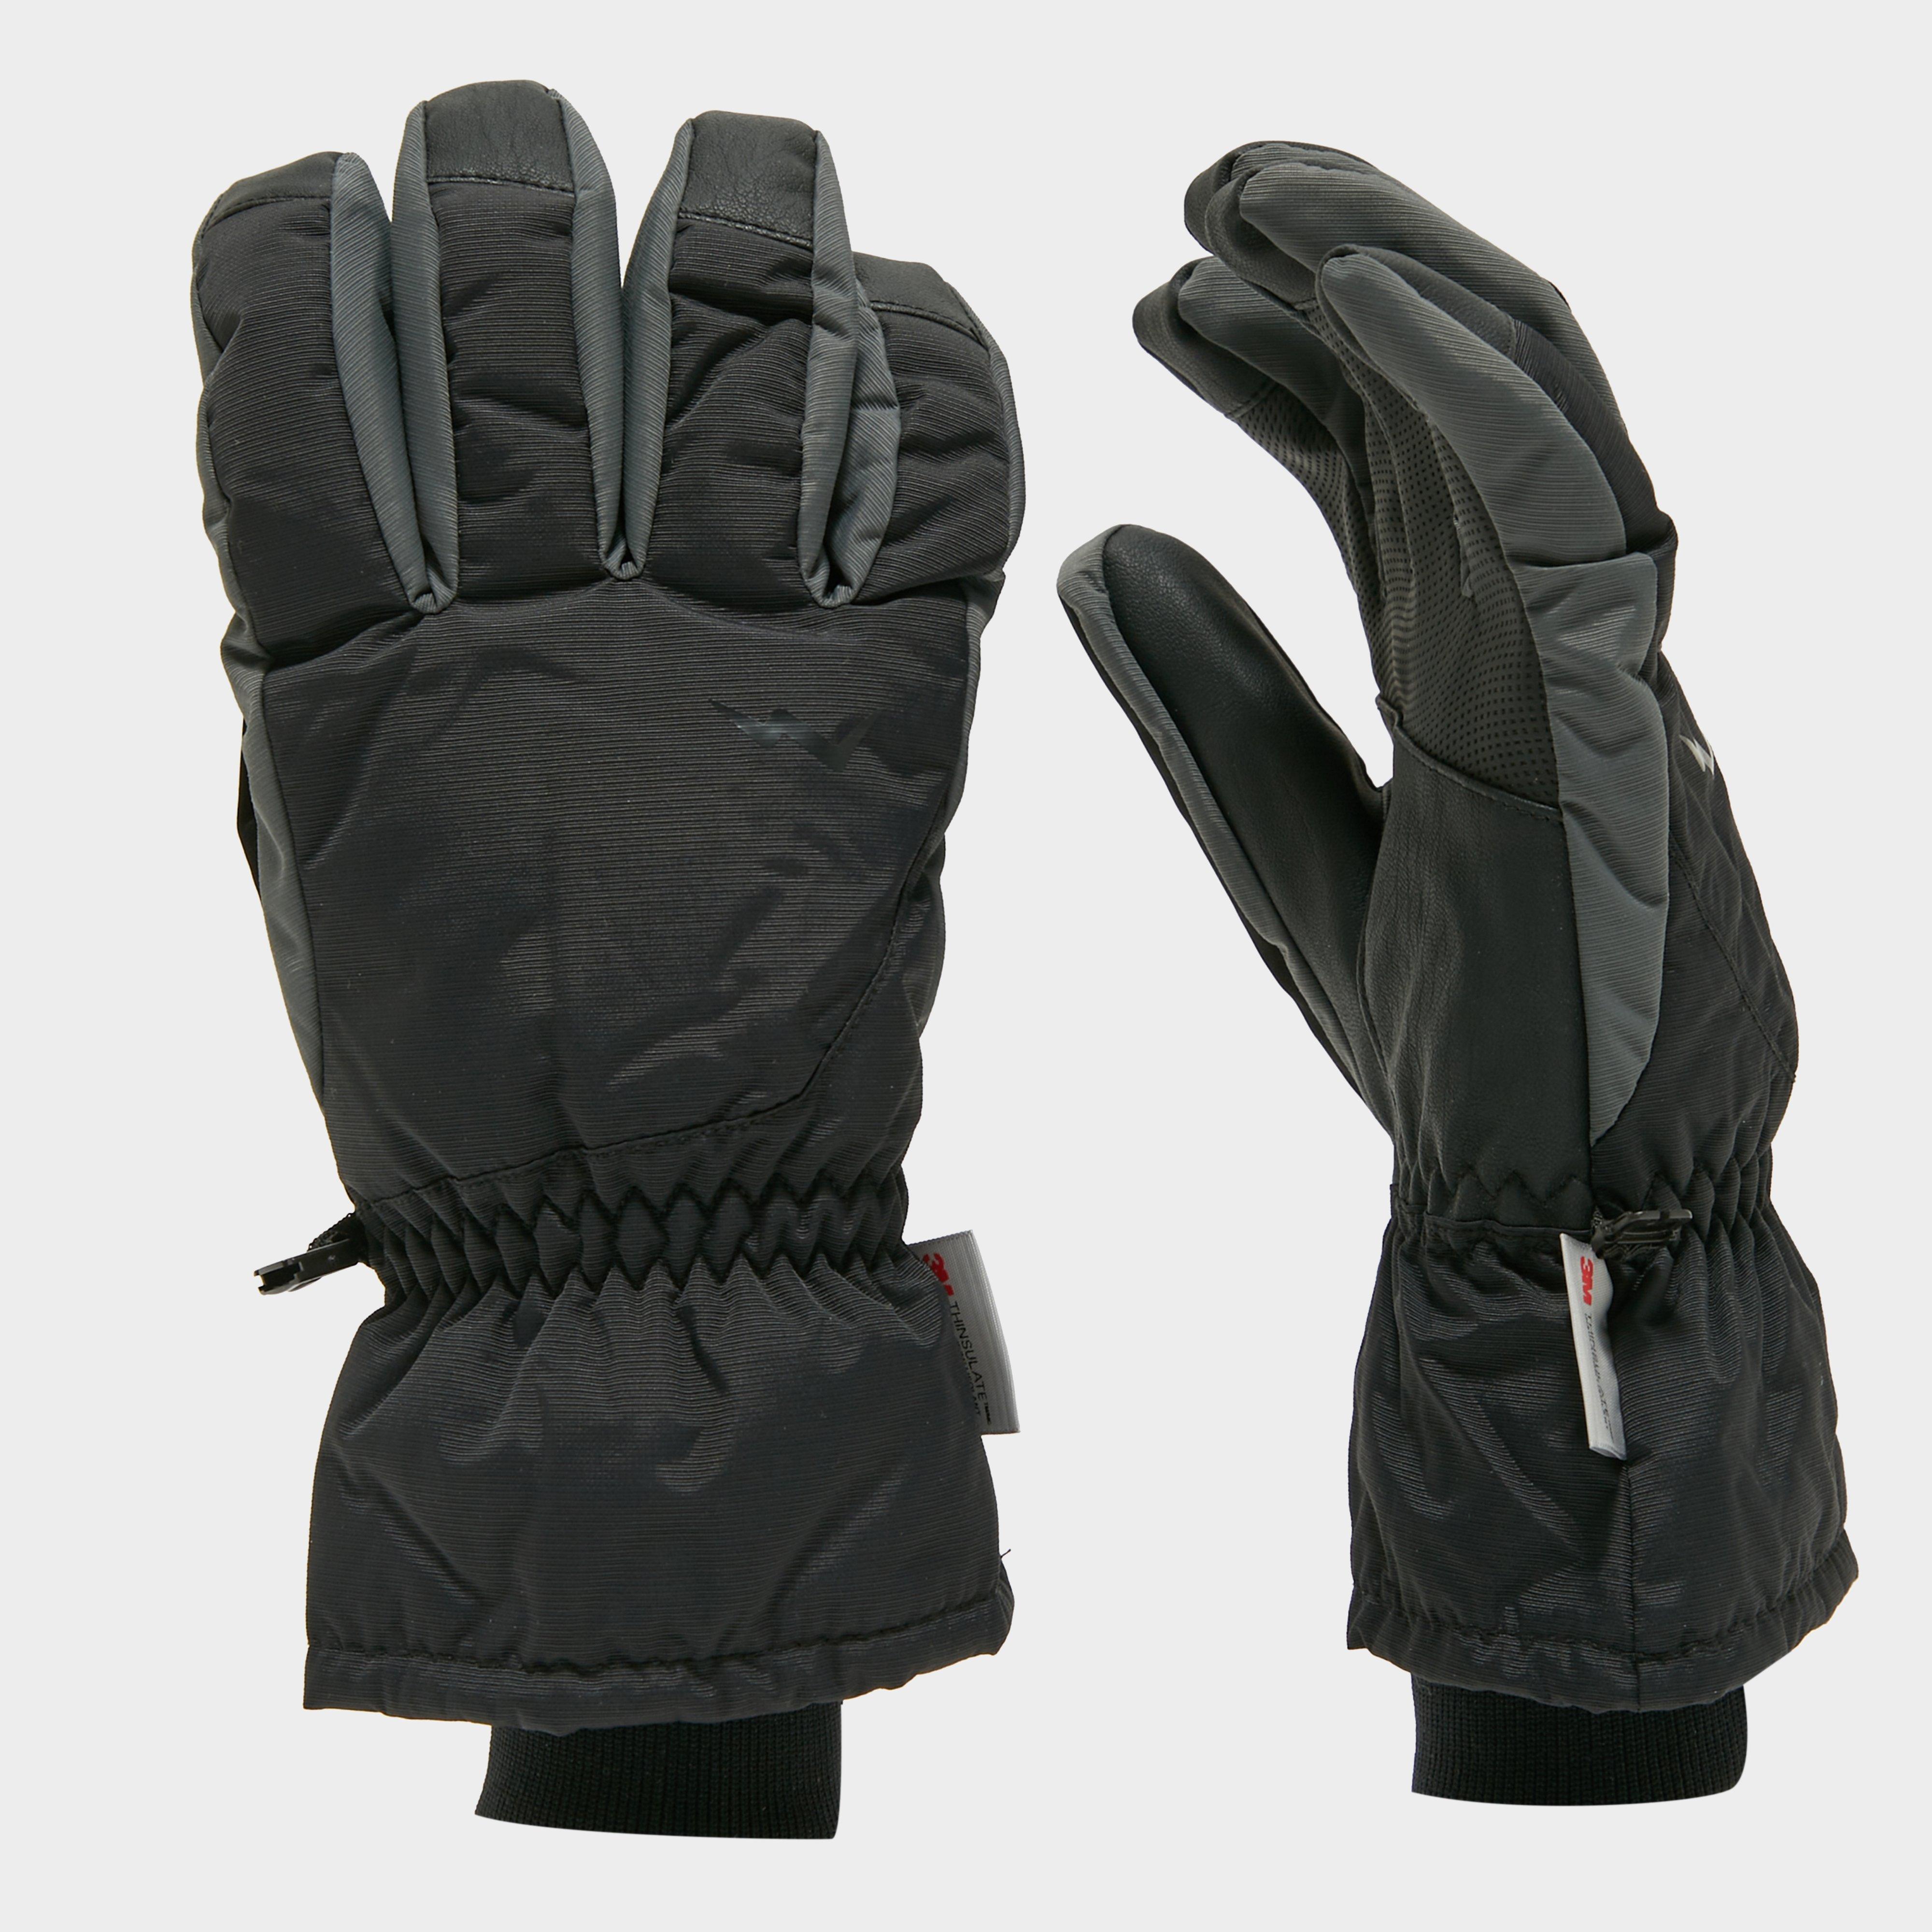 Peter Storm Men's Ski Glove, Black